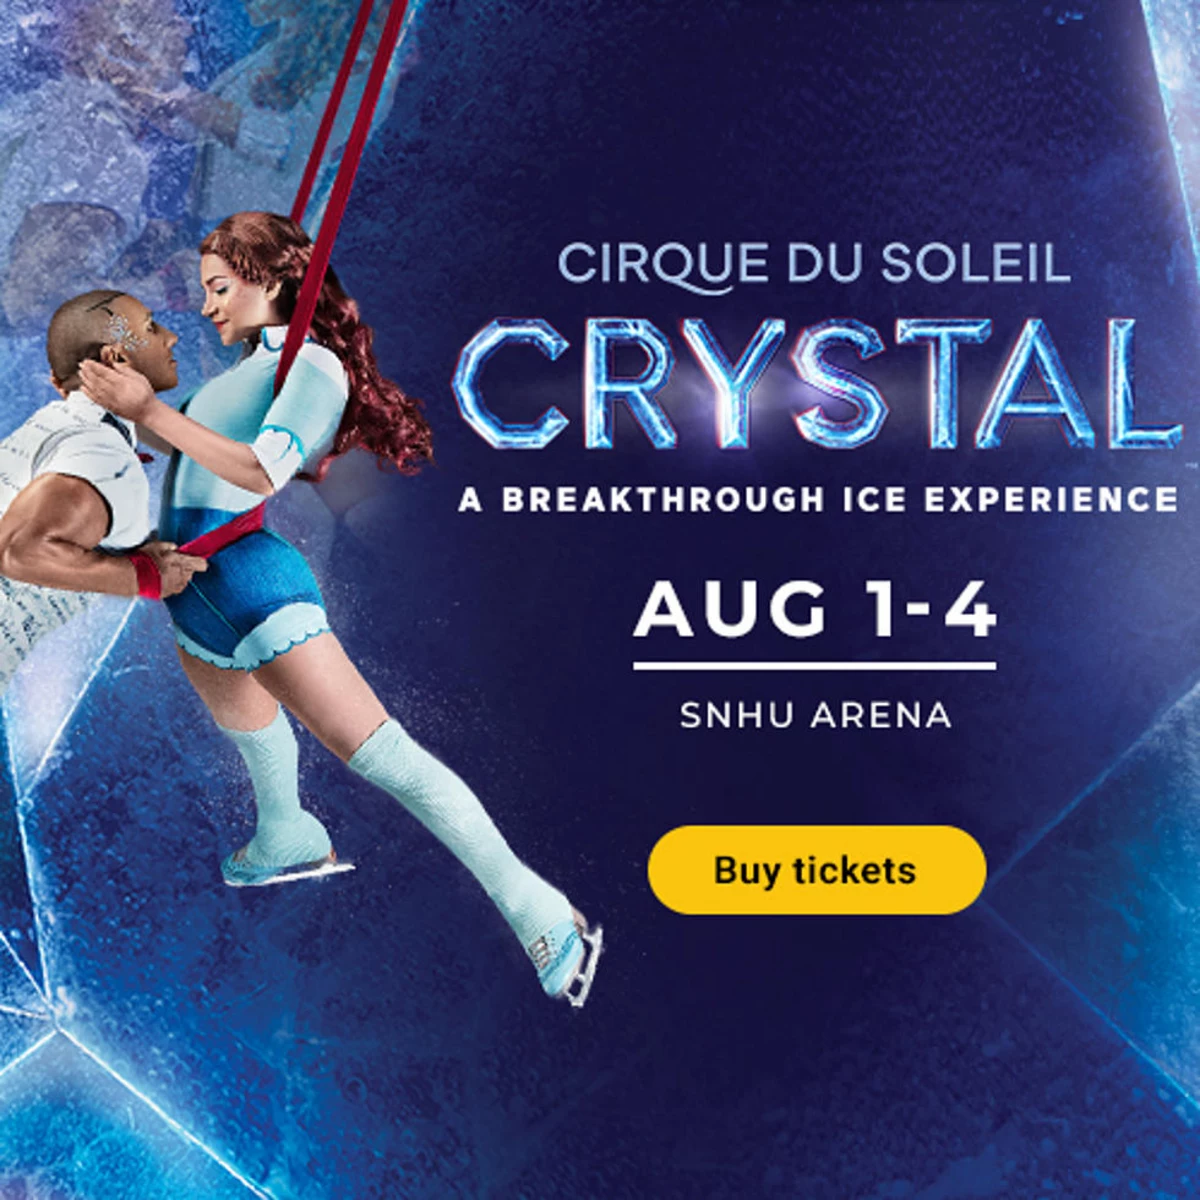 Cirque du Soleil CRYSTAL – Aug 1 – 4, 2019